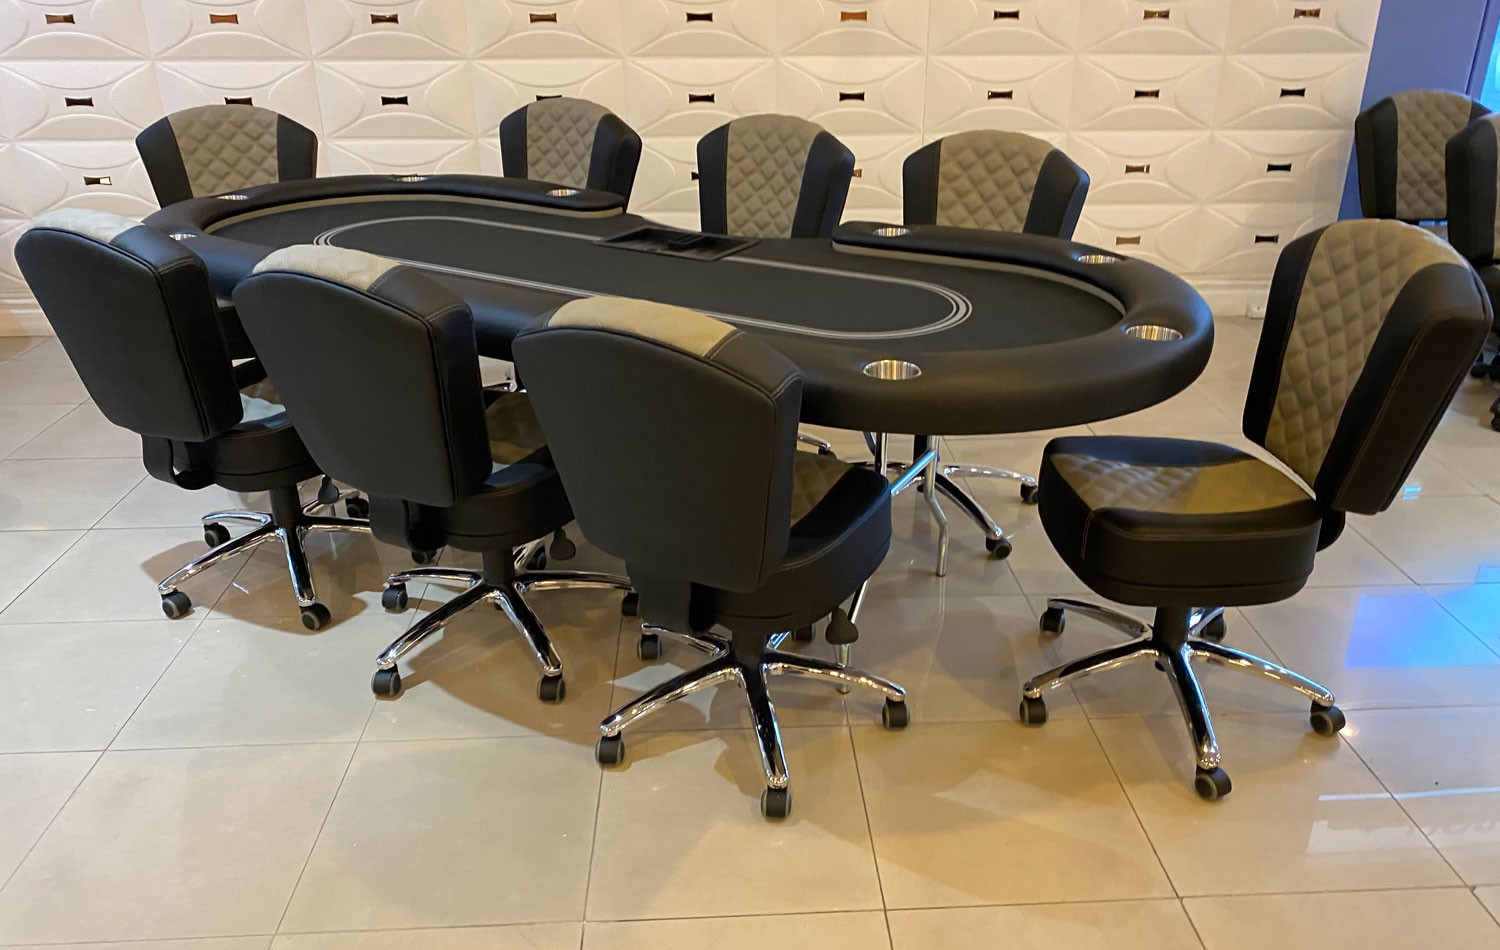 Casino texas holdem poker table with folding legs 1